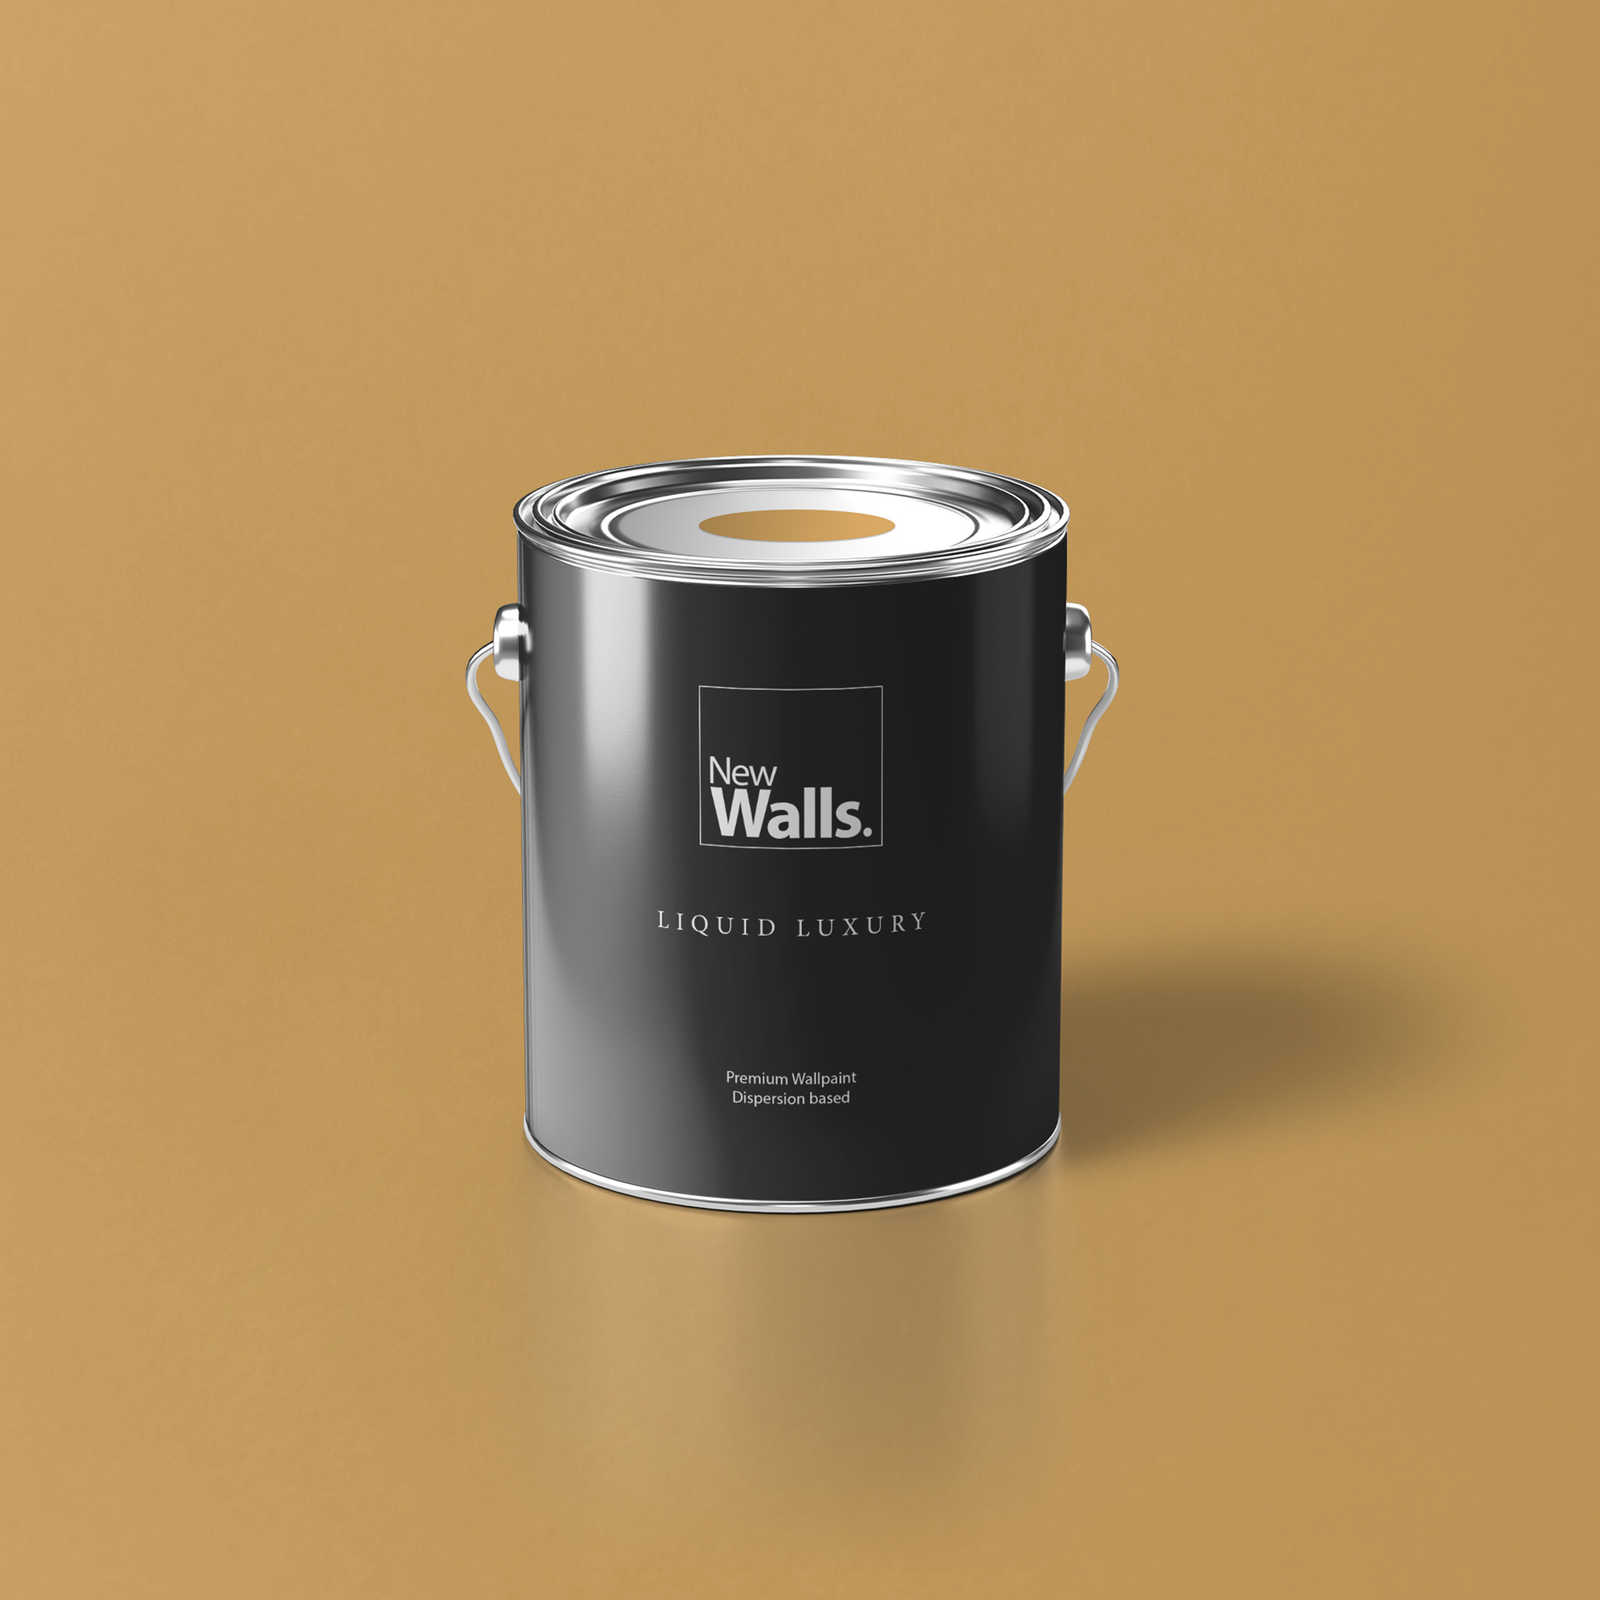 Premium Wall Paint Refreshing Mustard Yellow »Beige Orange/Sassy Saffron« NW812 – 2.5 litre
